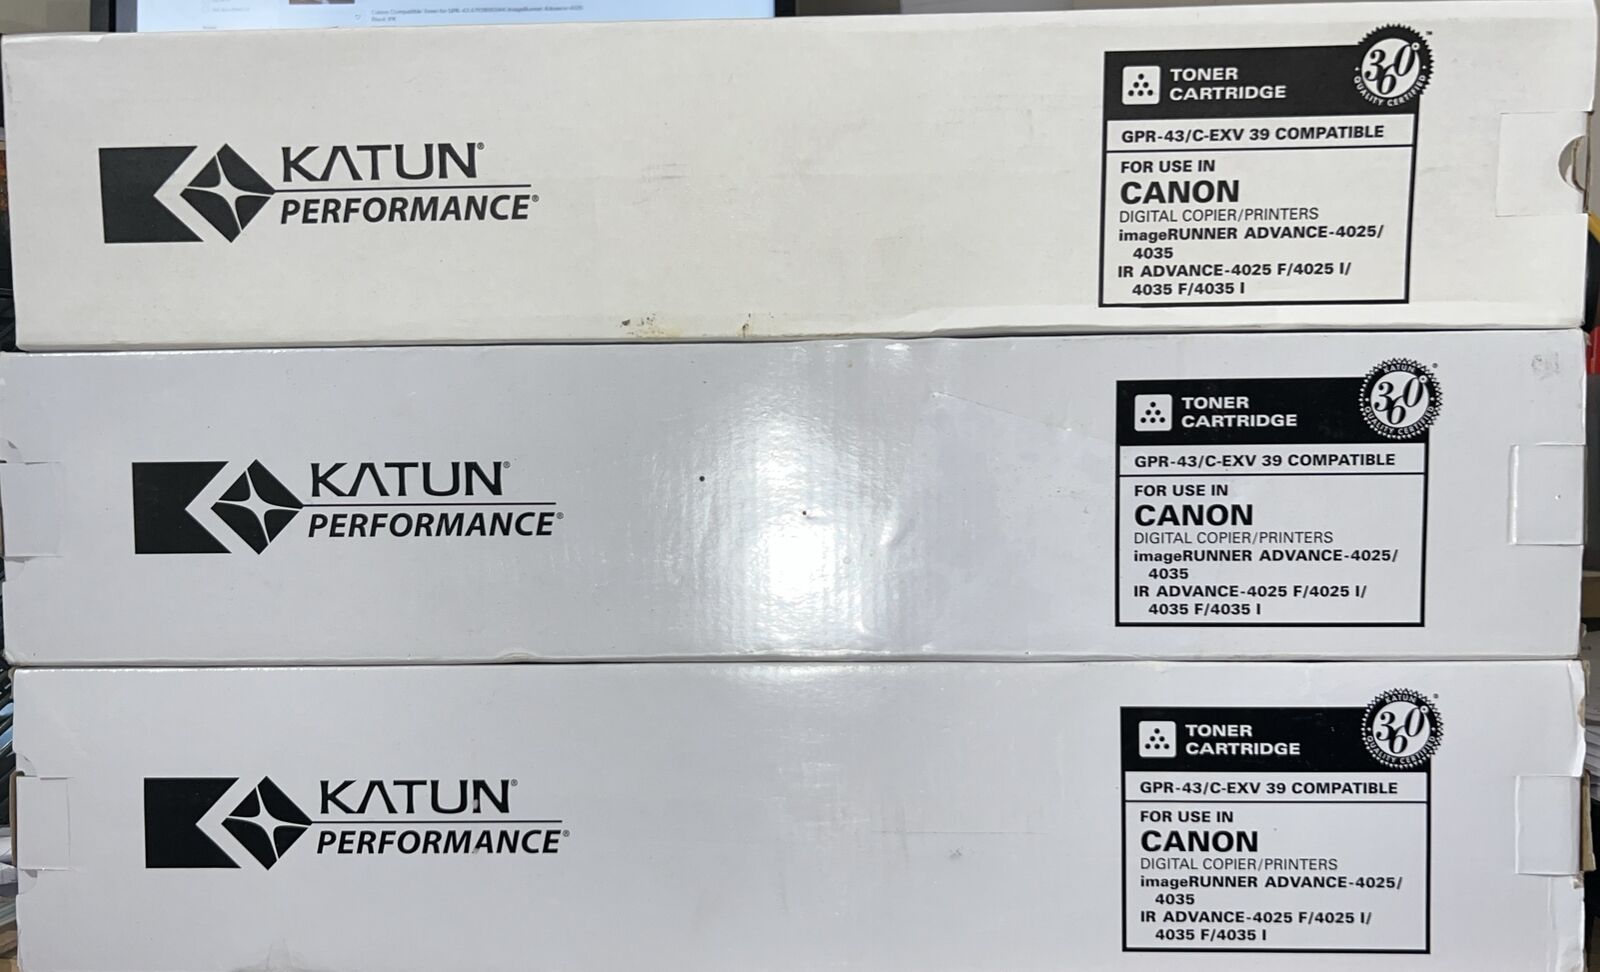 KATUN PERFORMANCE/CANON GPR-43/C-EXV 39 COMPATIBLE BLACK TONER SOLD INDIVIDUALLY